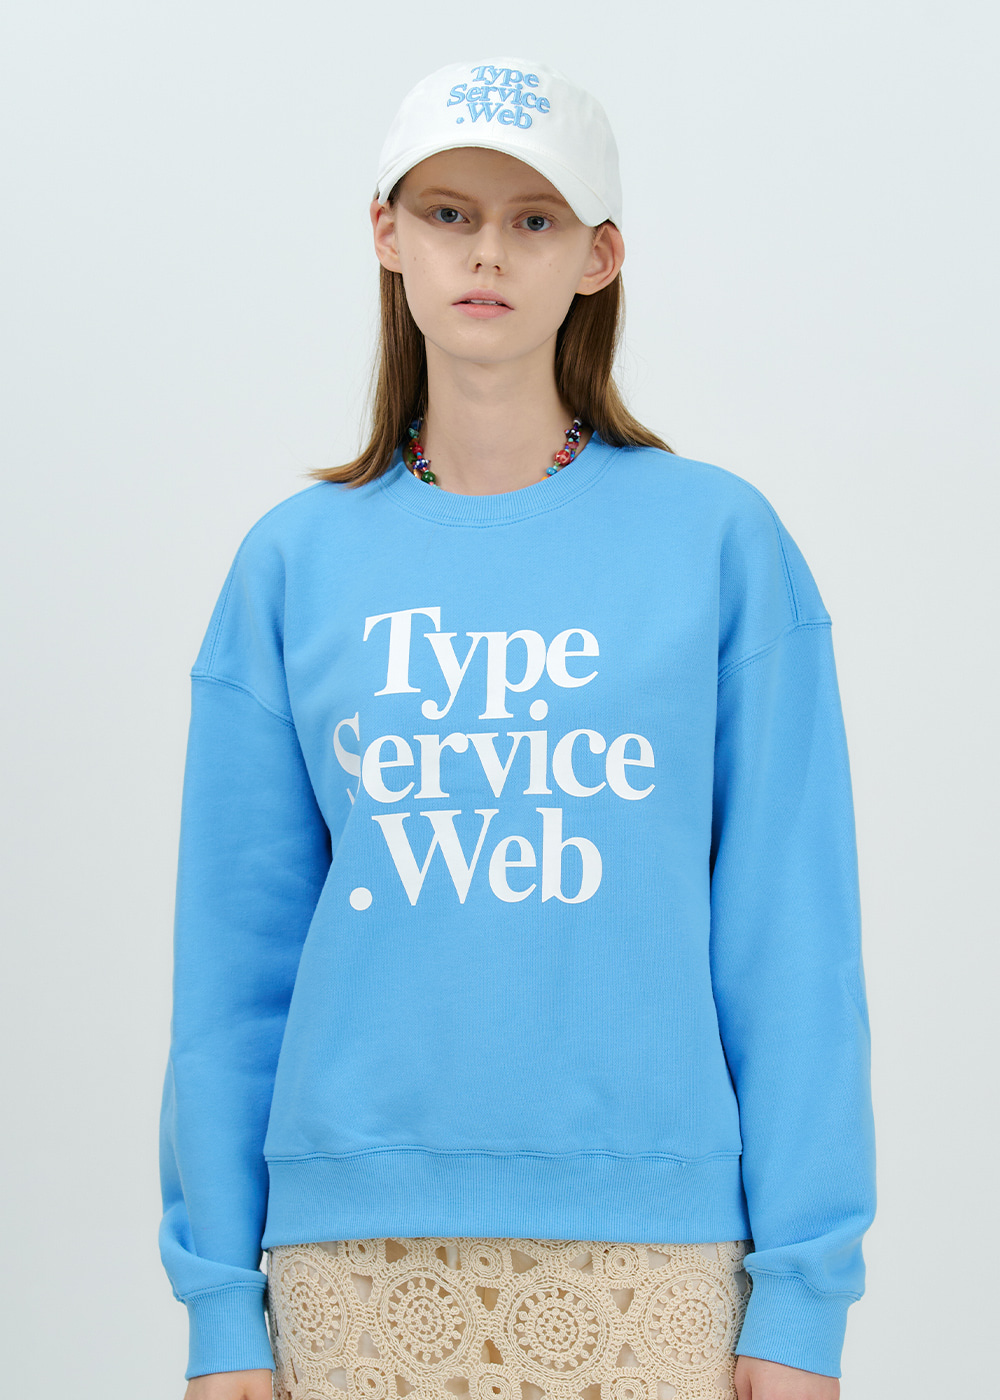 Typeservice Web Sweatshirt [Light Blue]